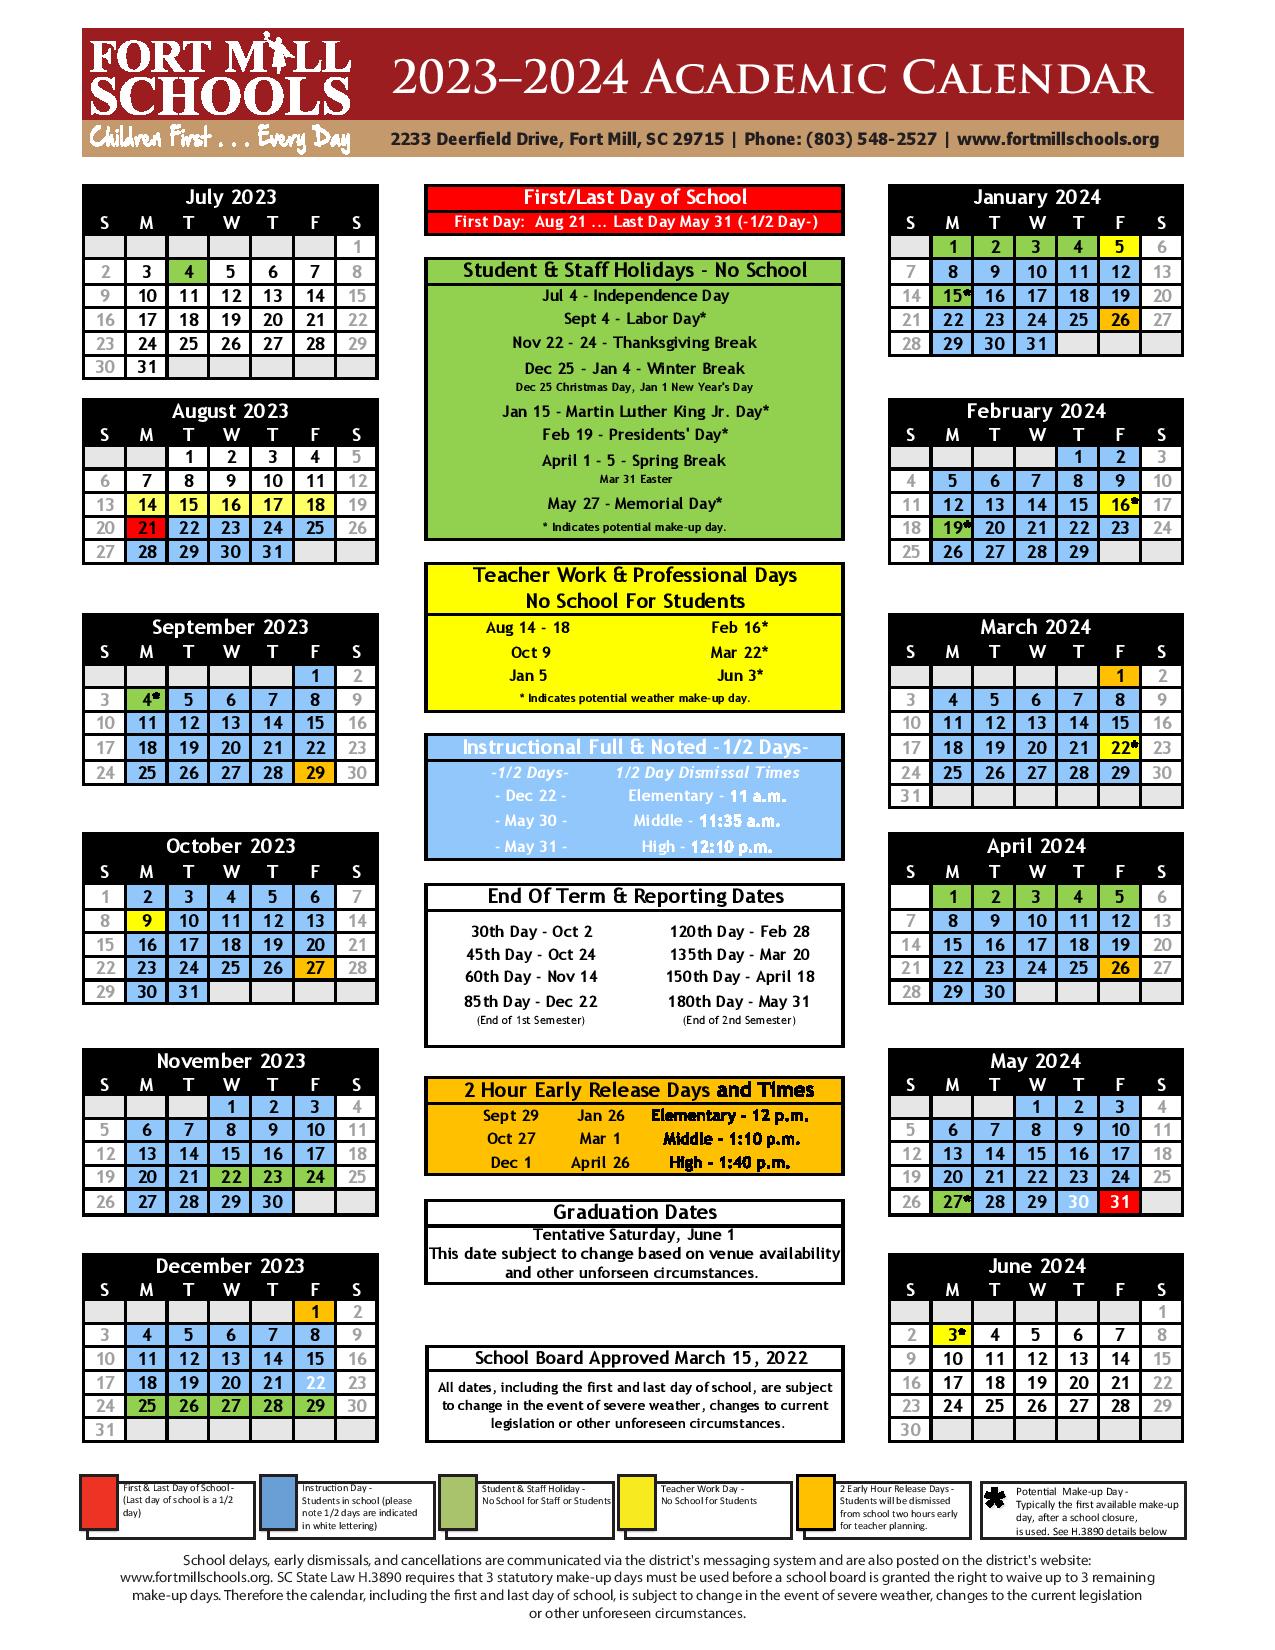 Fort Mill School District Calendar 2023 2024 In PDF School Calendar Info